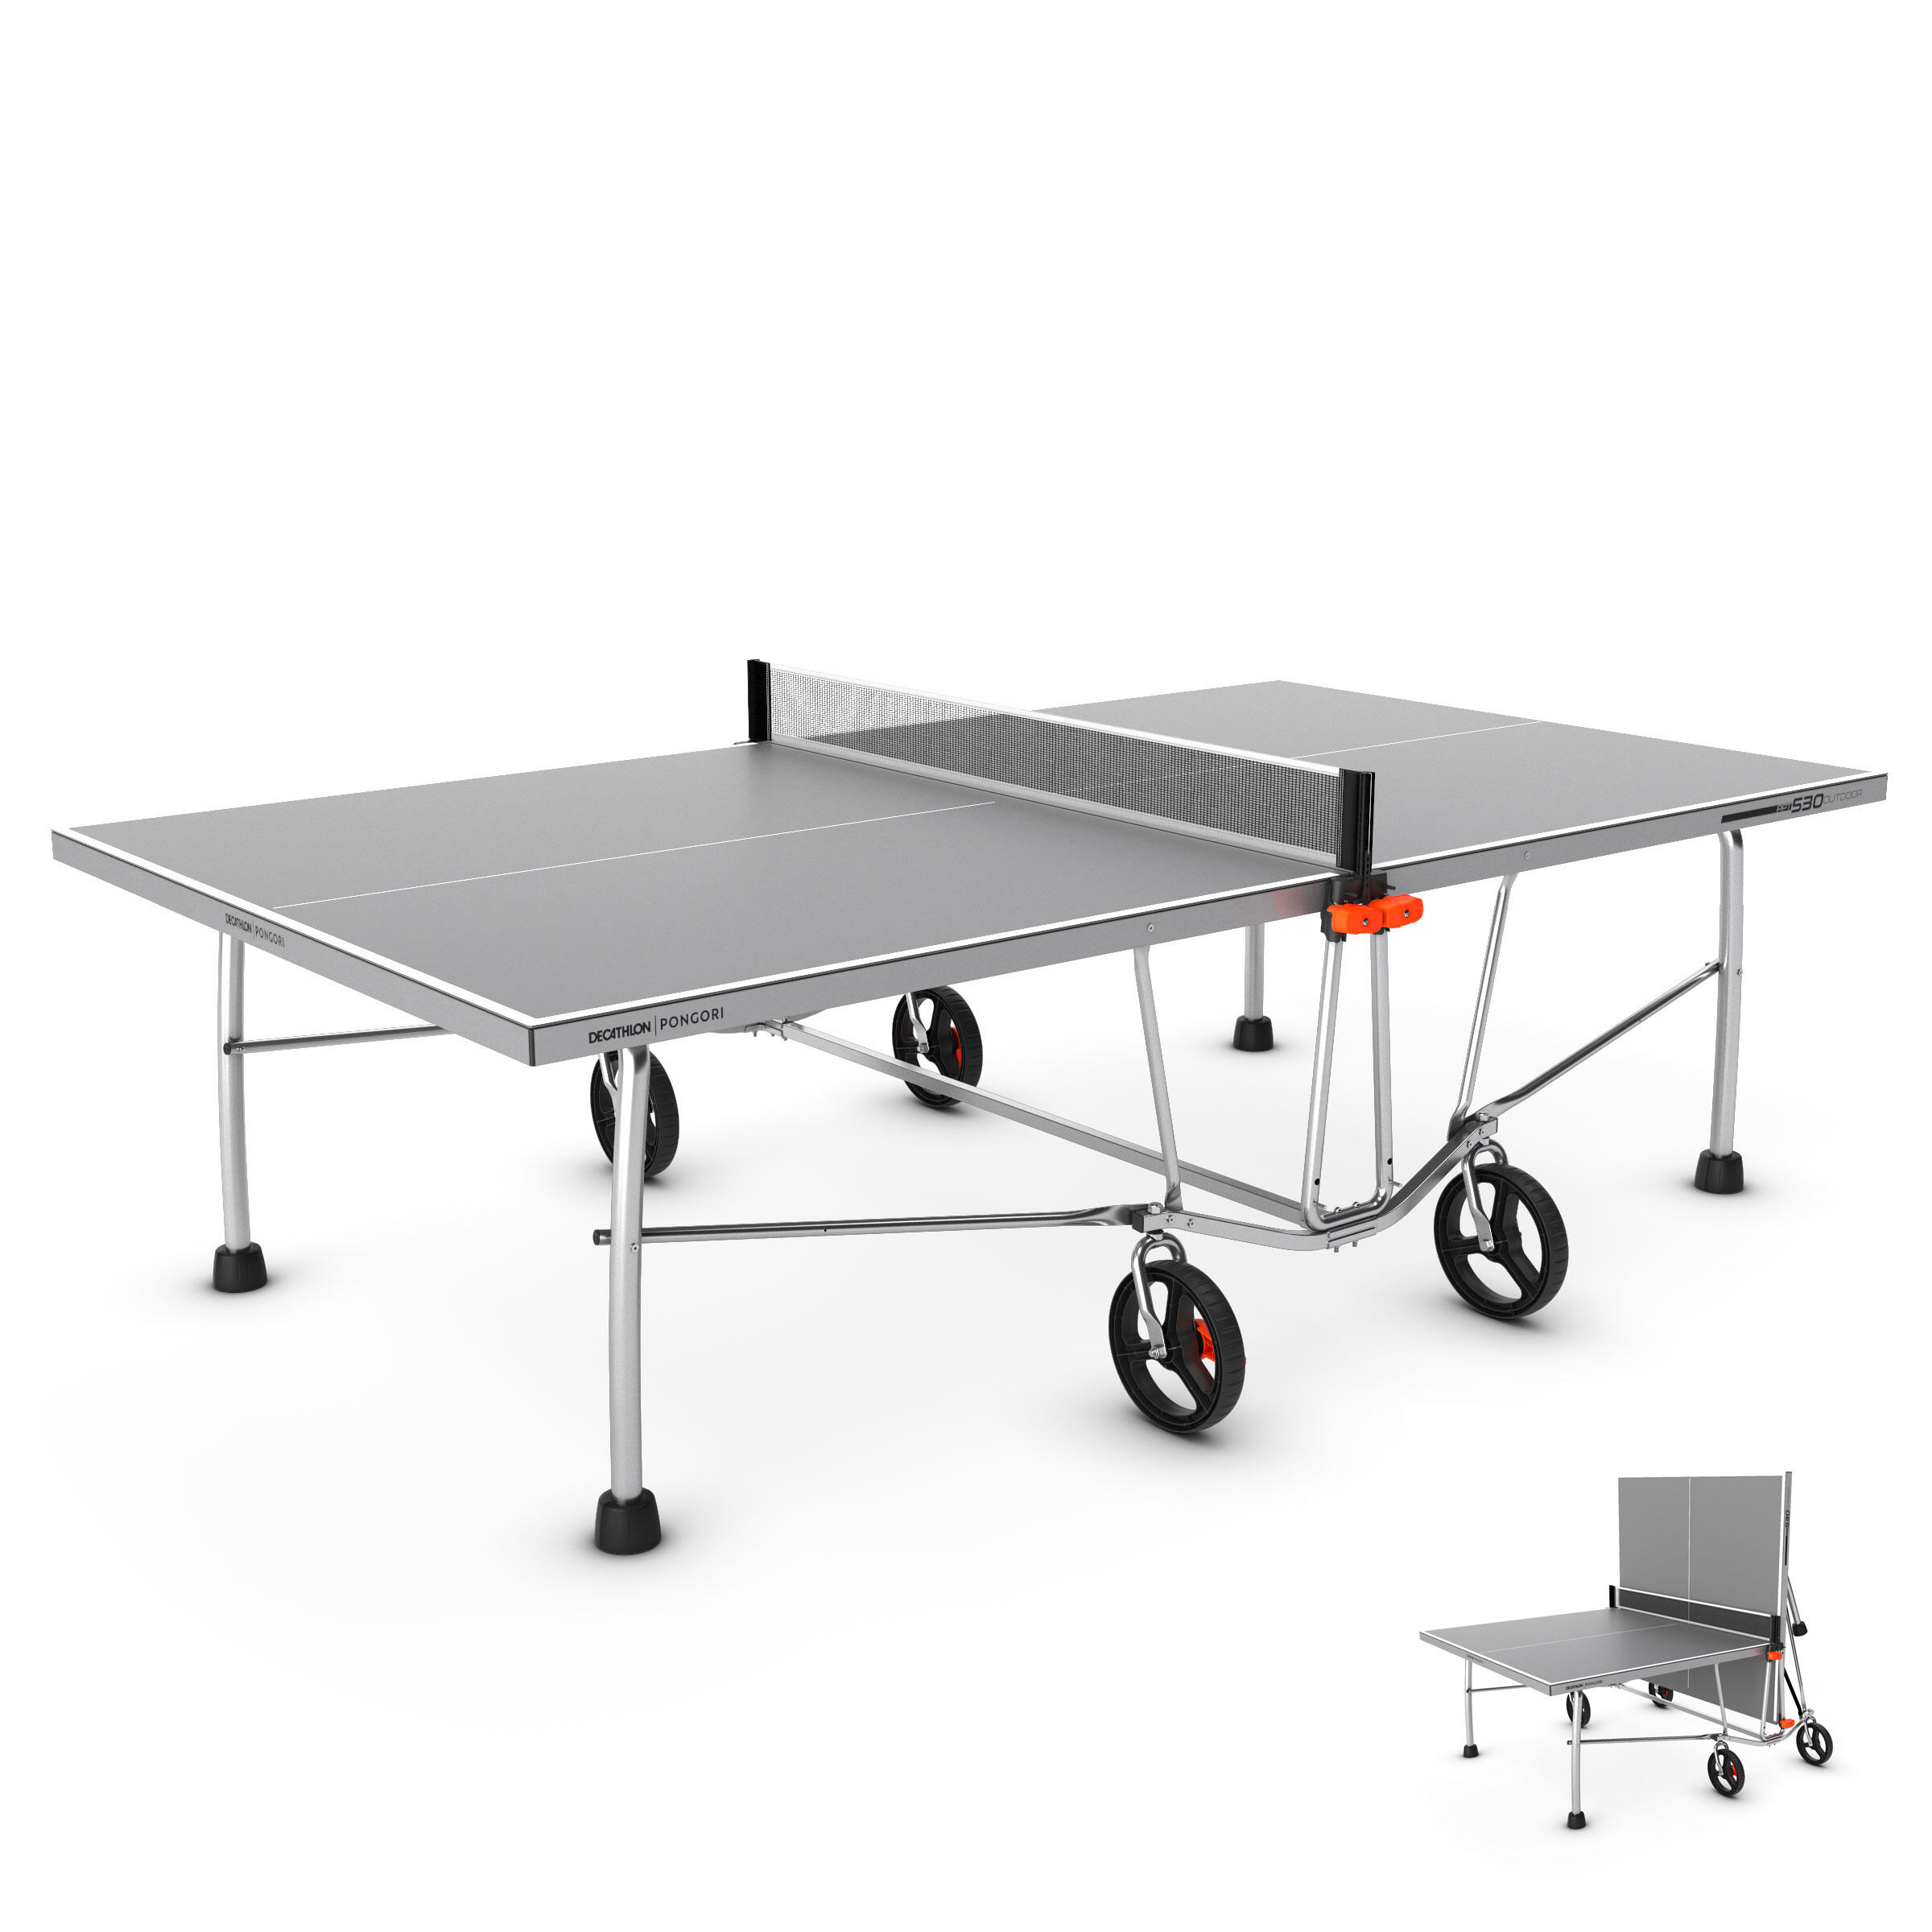 PPT 530 Free Table Tennis Table - Decathlon